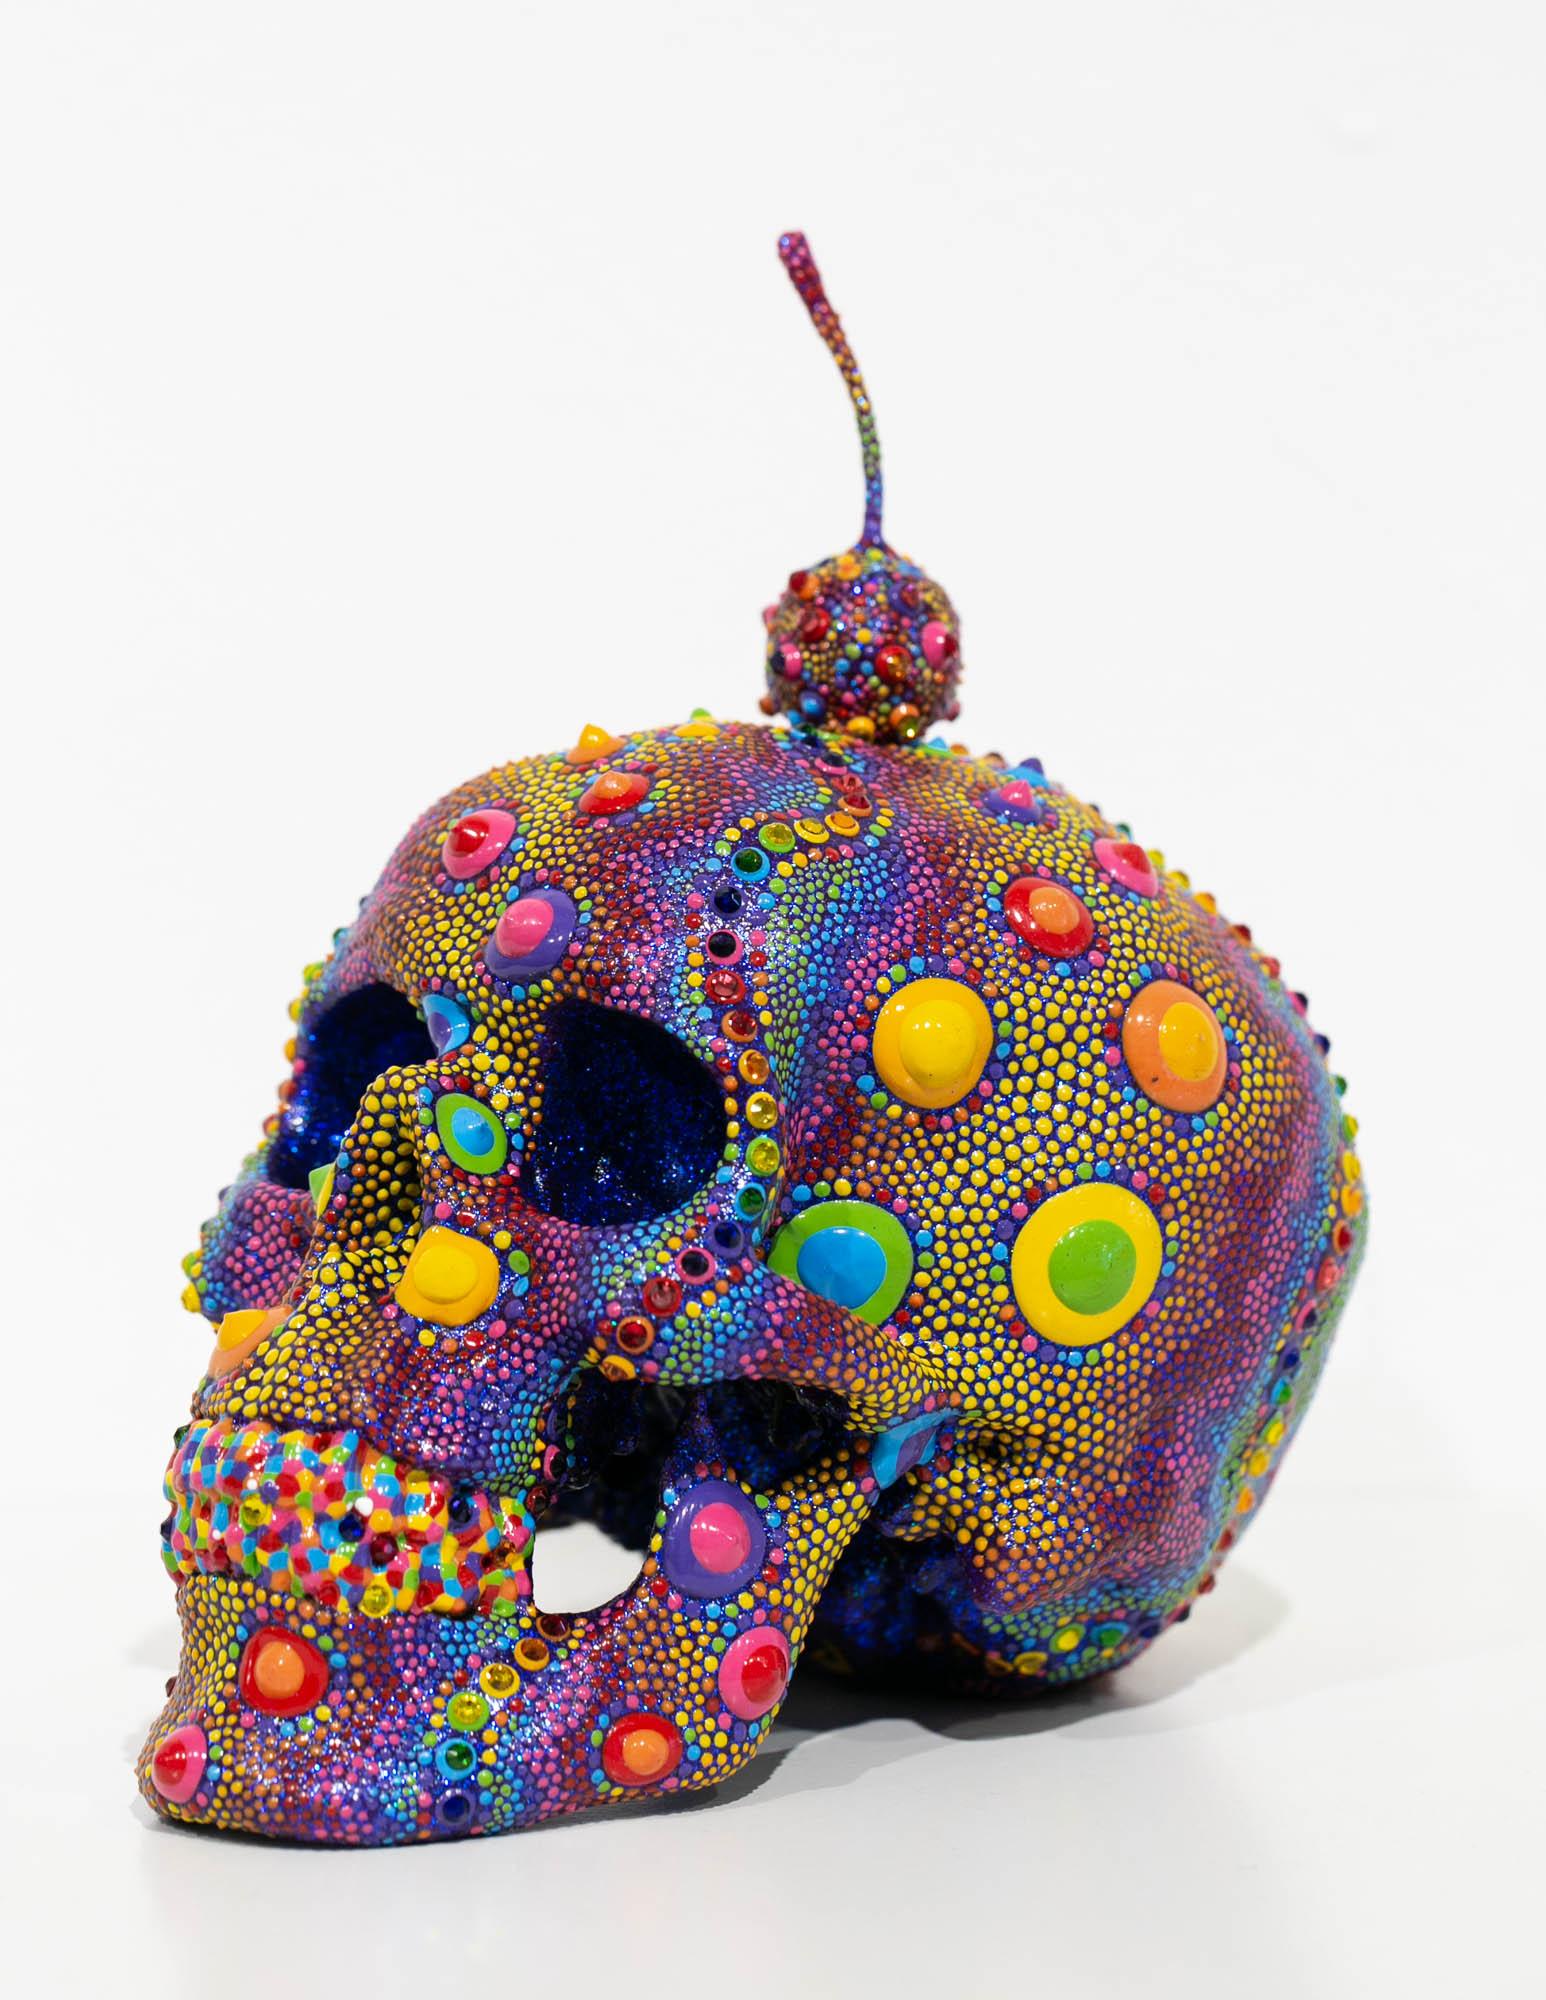 Candy Urchin Skull - Sculpture by PJ Linden